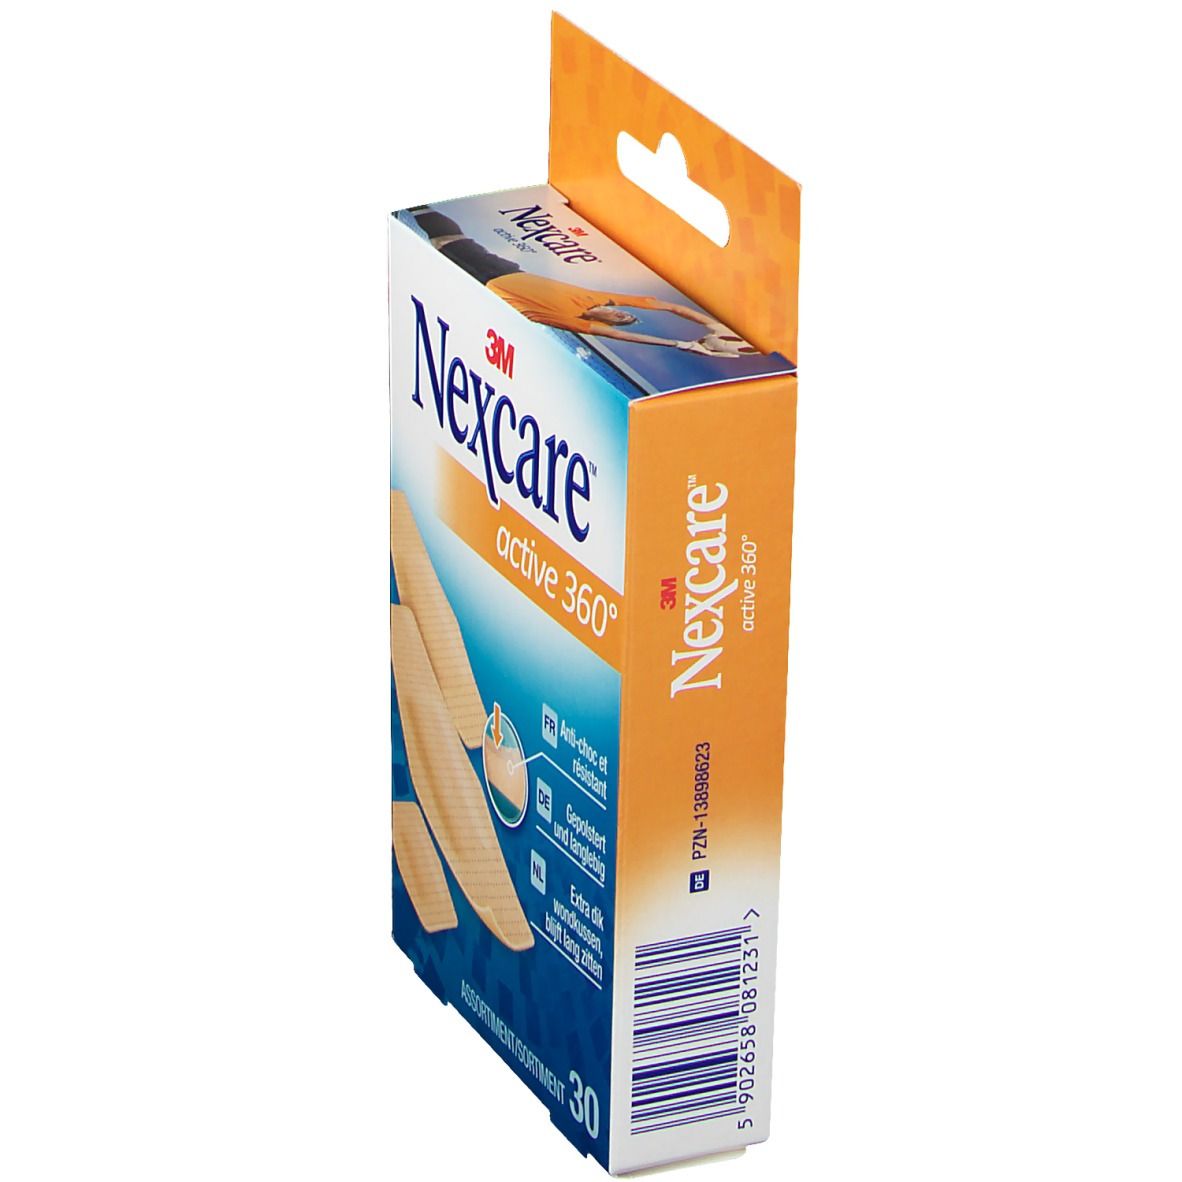 Nexcare™ Active 360° Pflaster beige steril